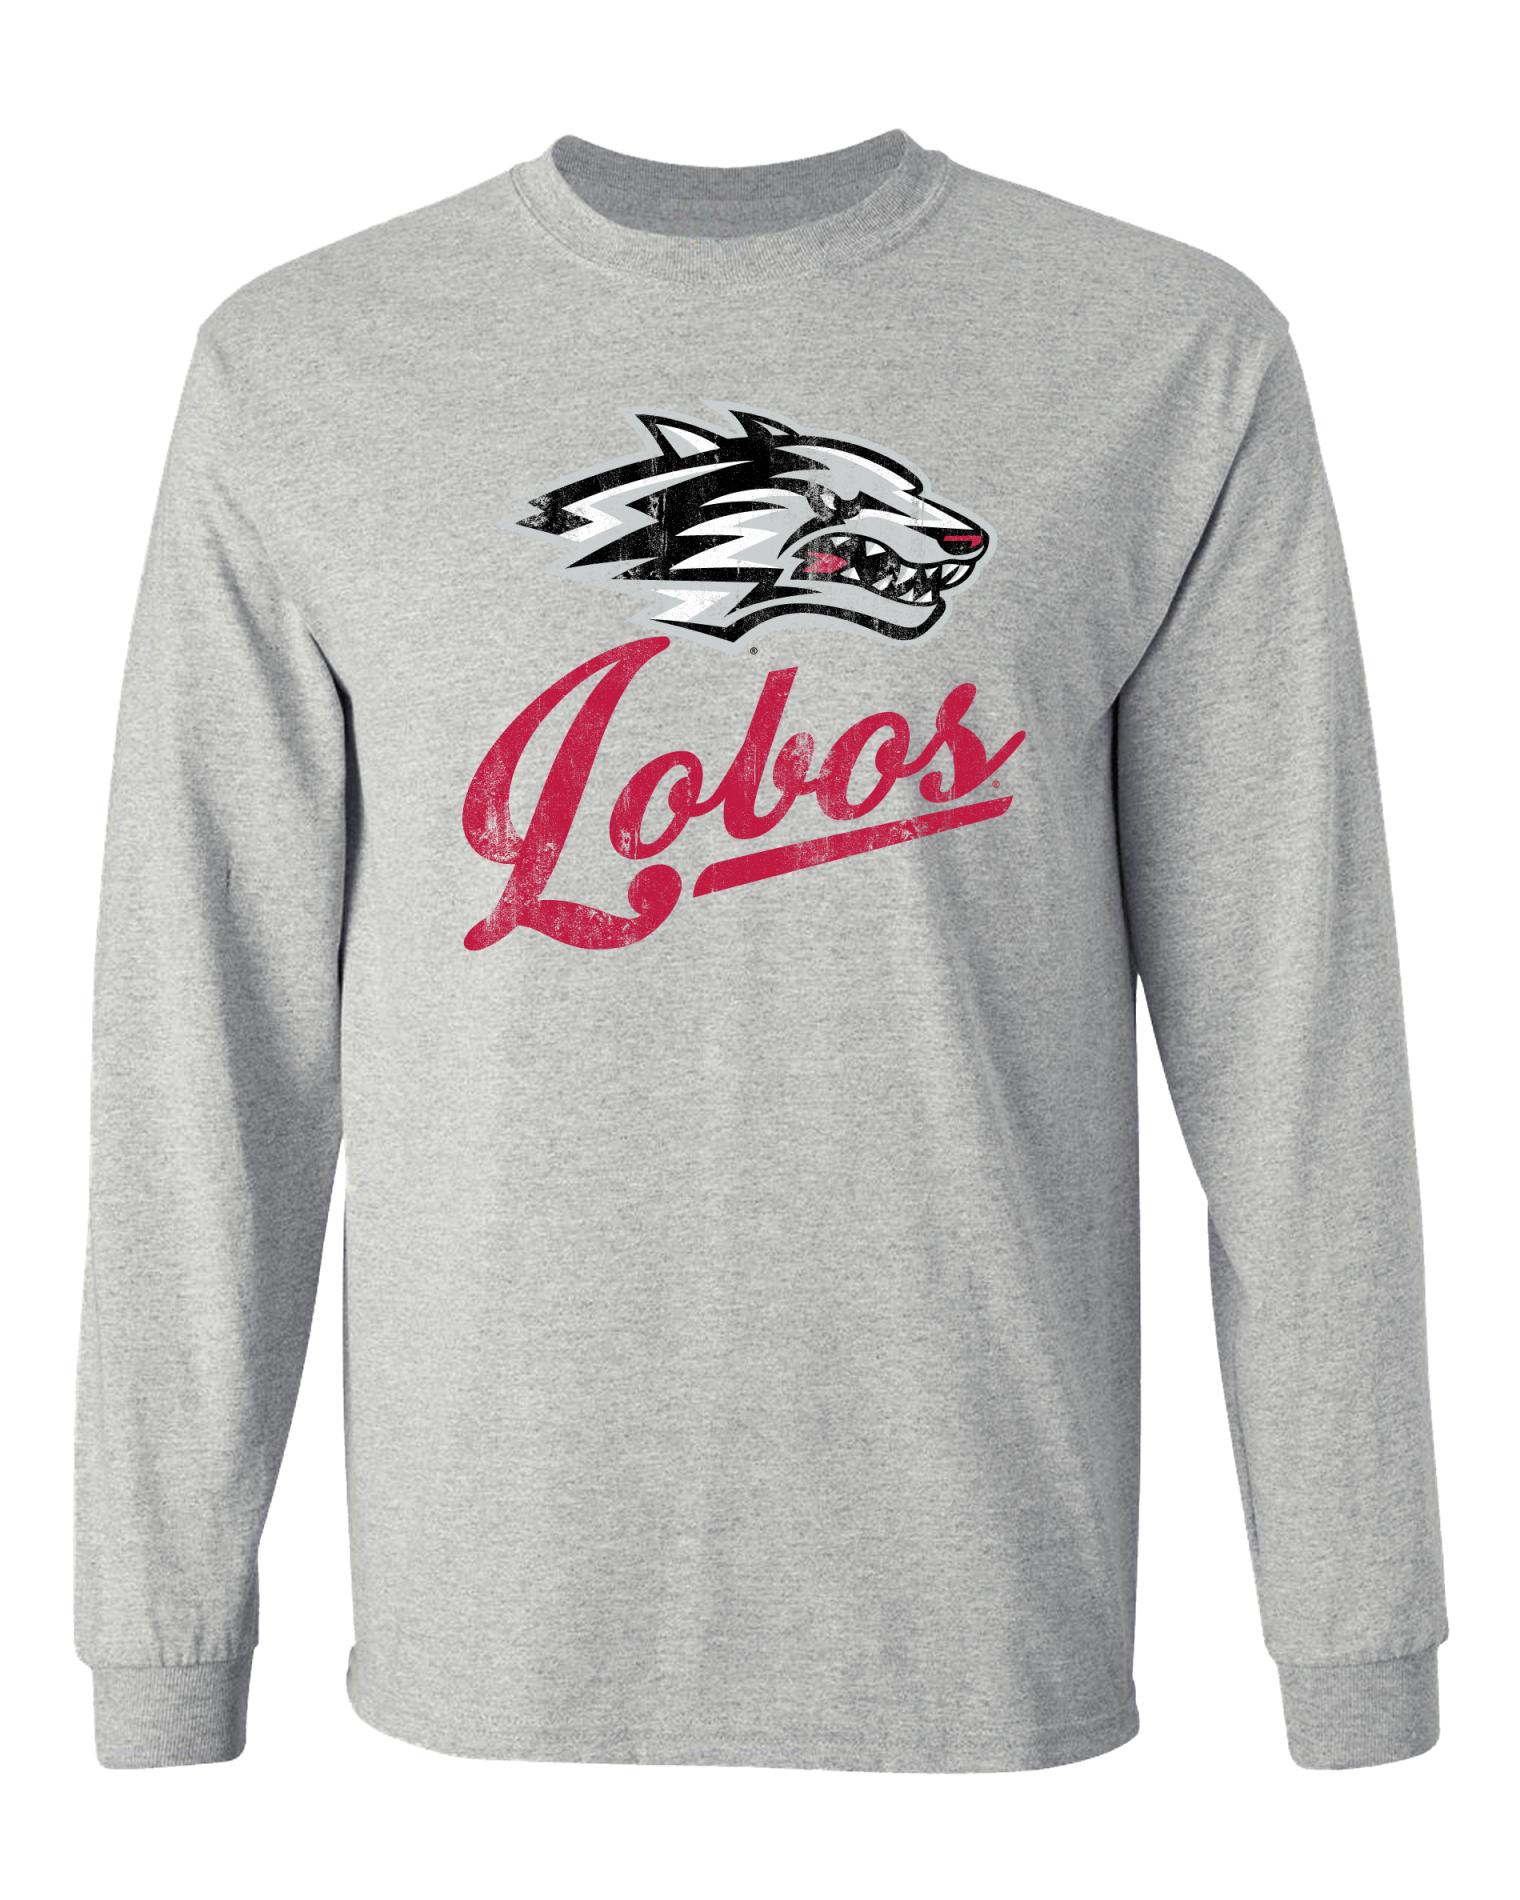 NCAA Men's Long-Sleeve Shirt - University of New Mexico Lobos